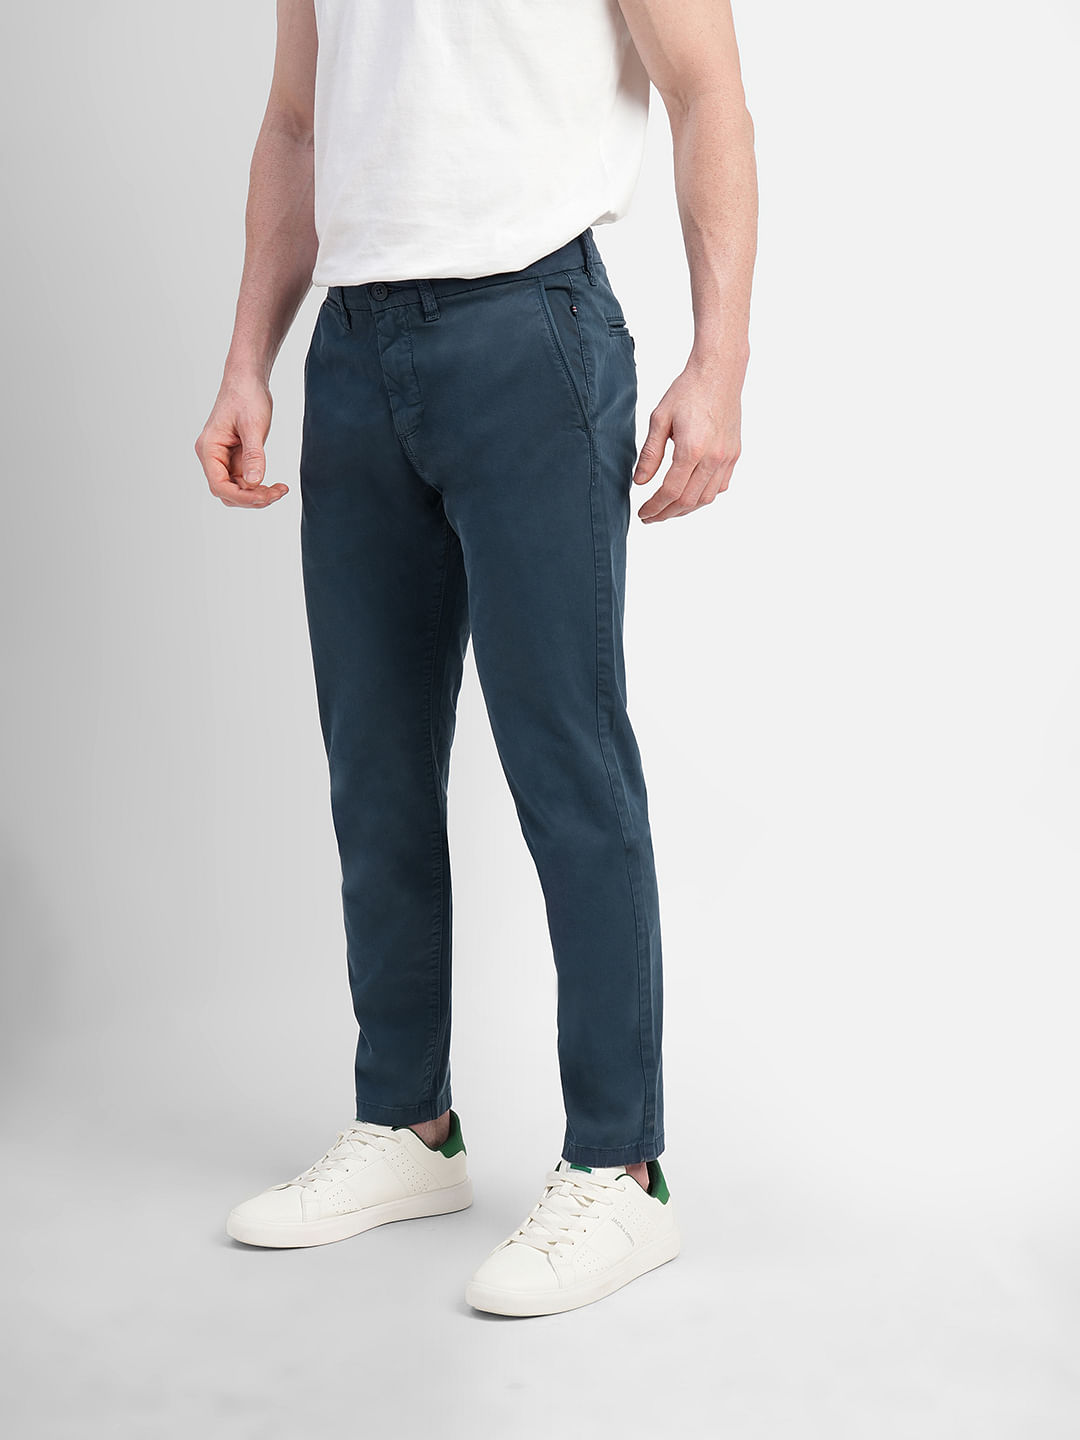 Buy HUNGSON Mens Chinos Slim Fit Stretch FlatFront Skinny Dress Pants  Light Grey 30 at Amazonin